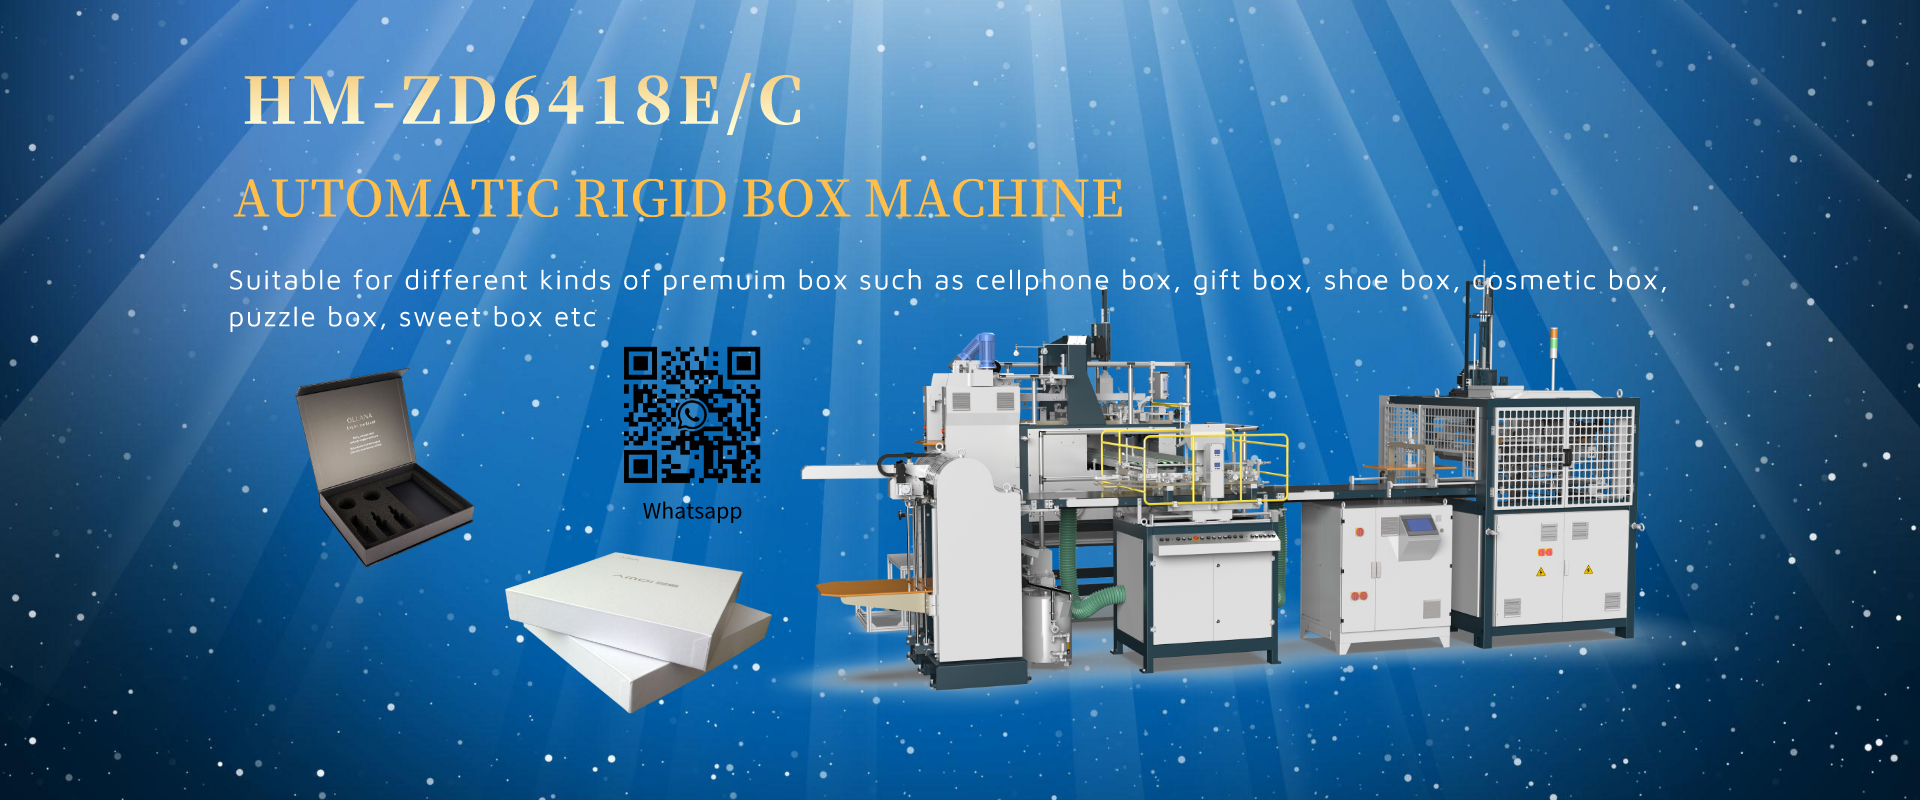 AUTOMATIC RIGID BOX MAKING MACHINE 